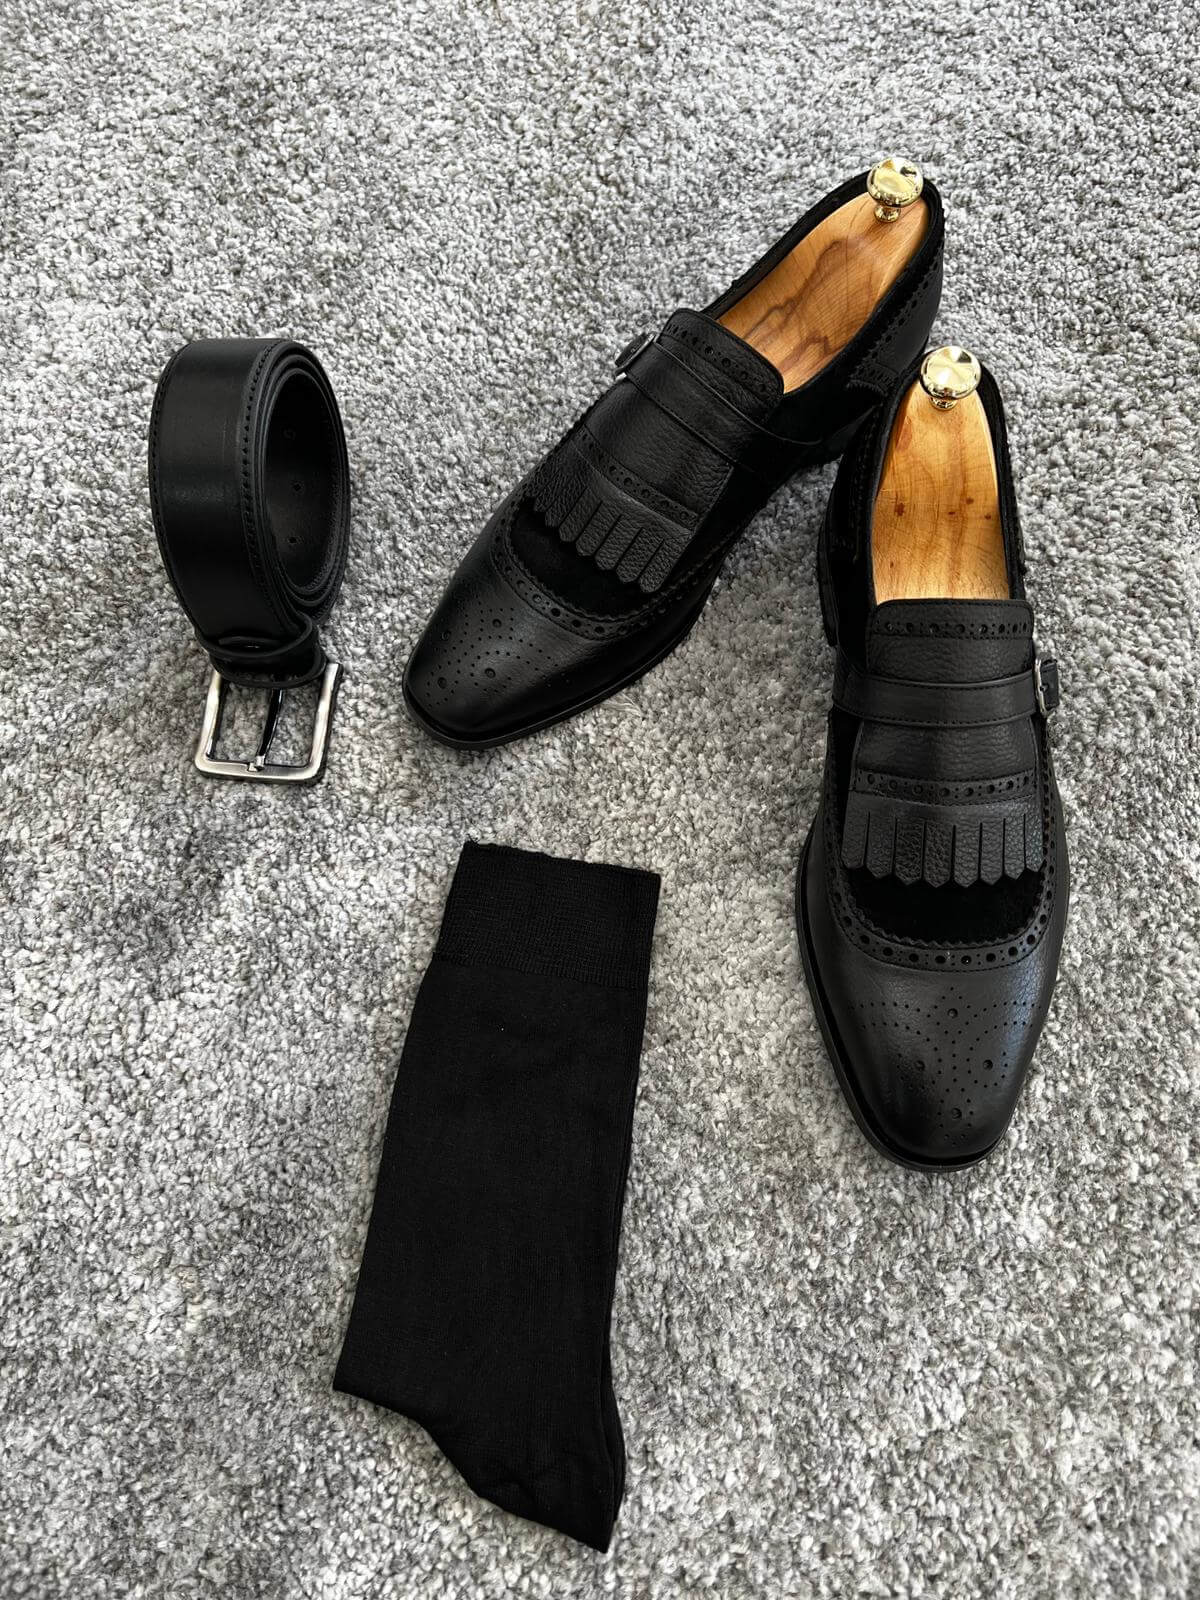 Kenk Classic Black Shoes